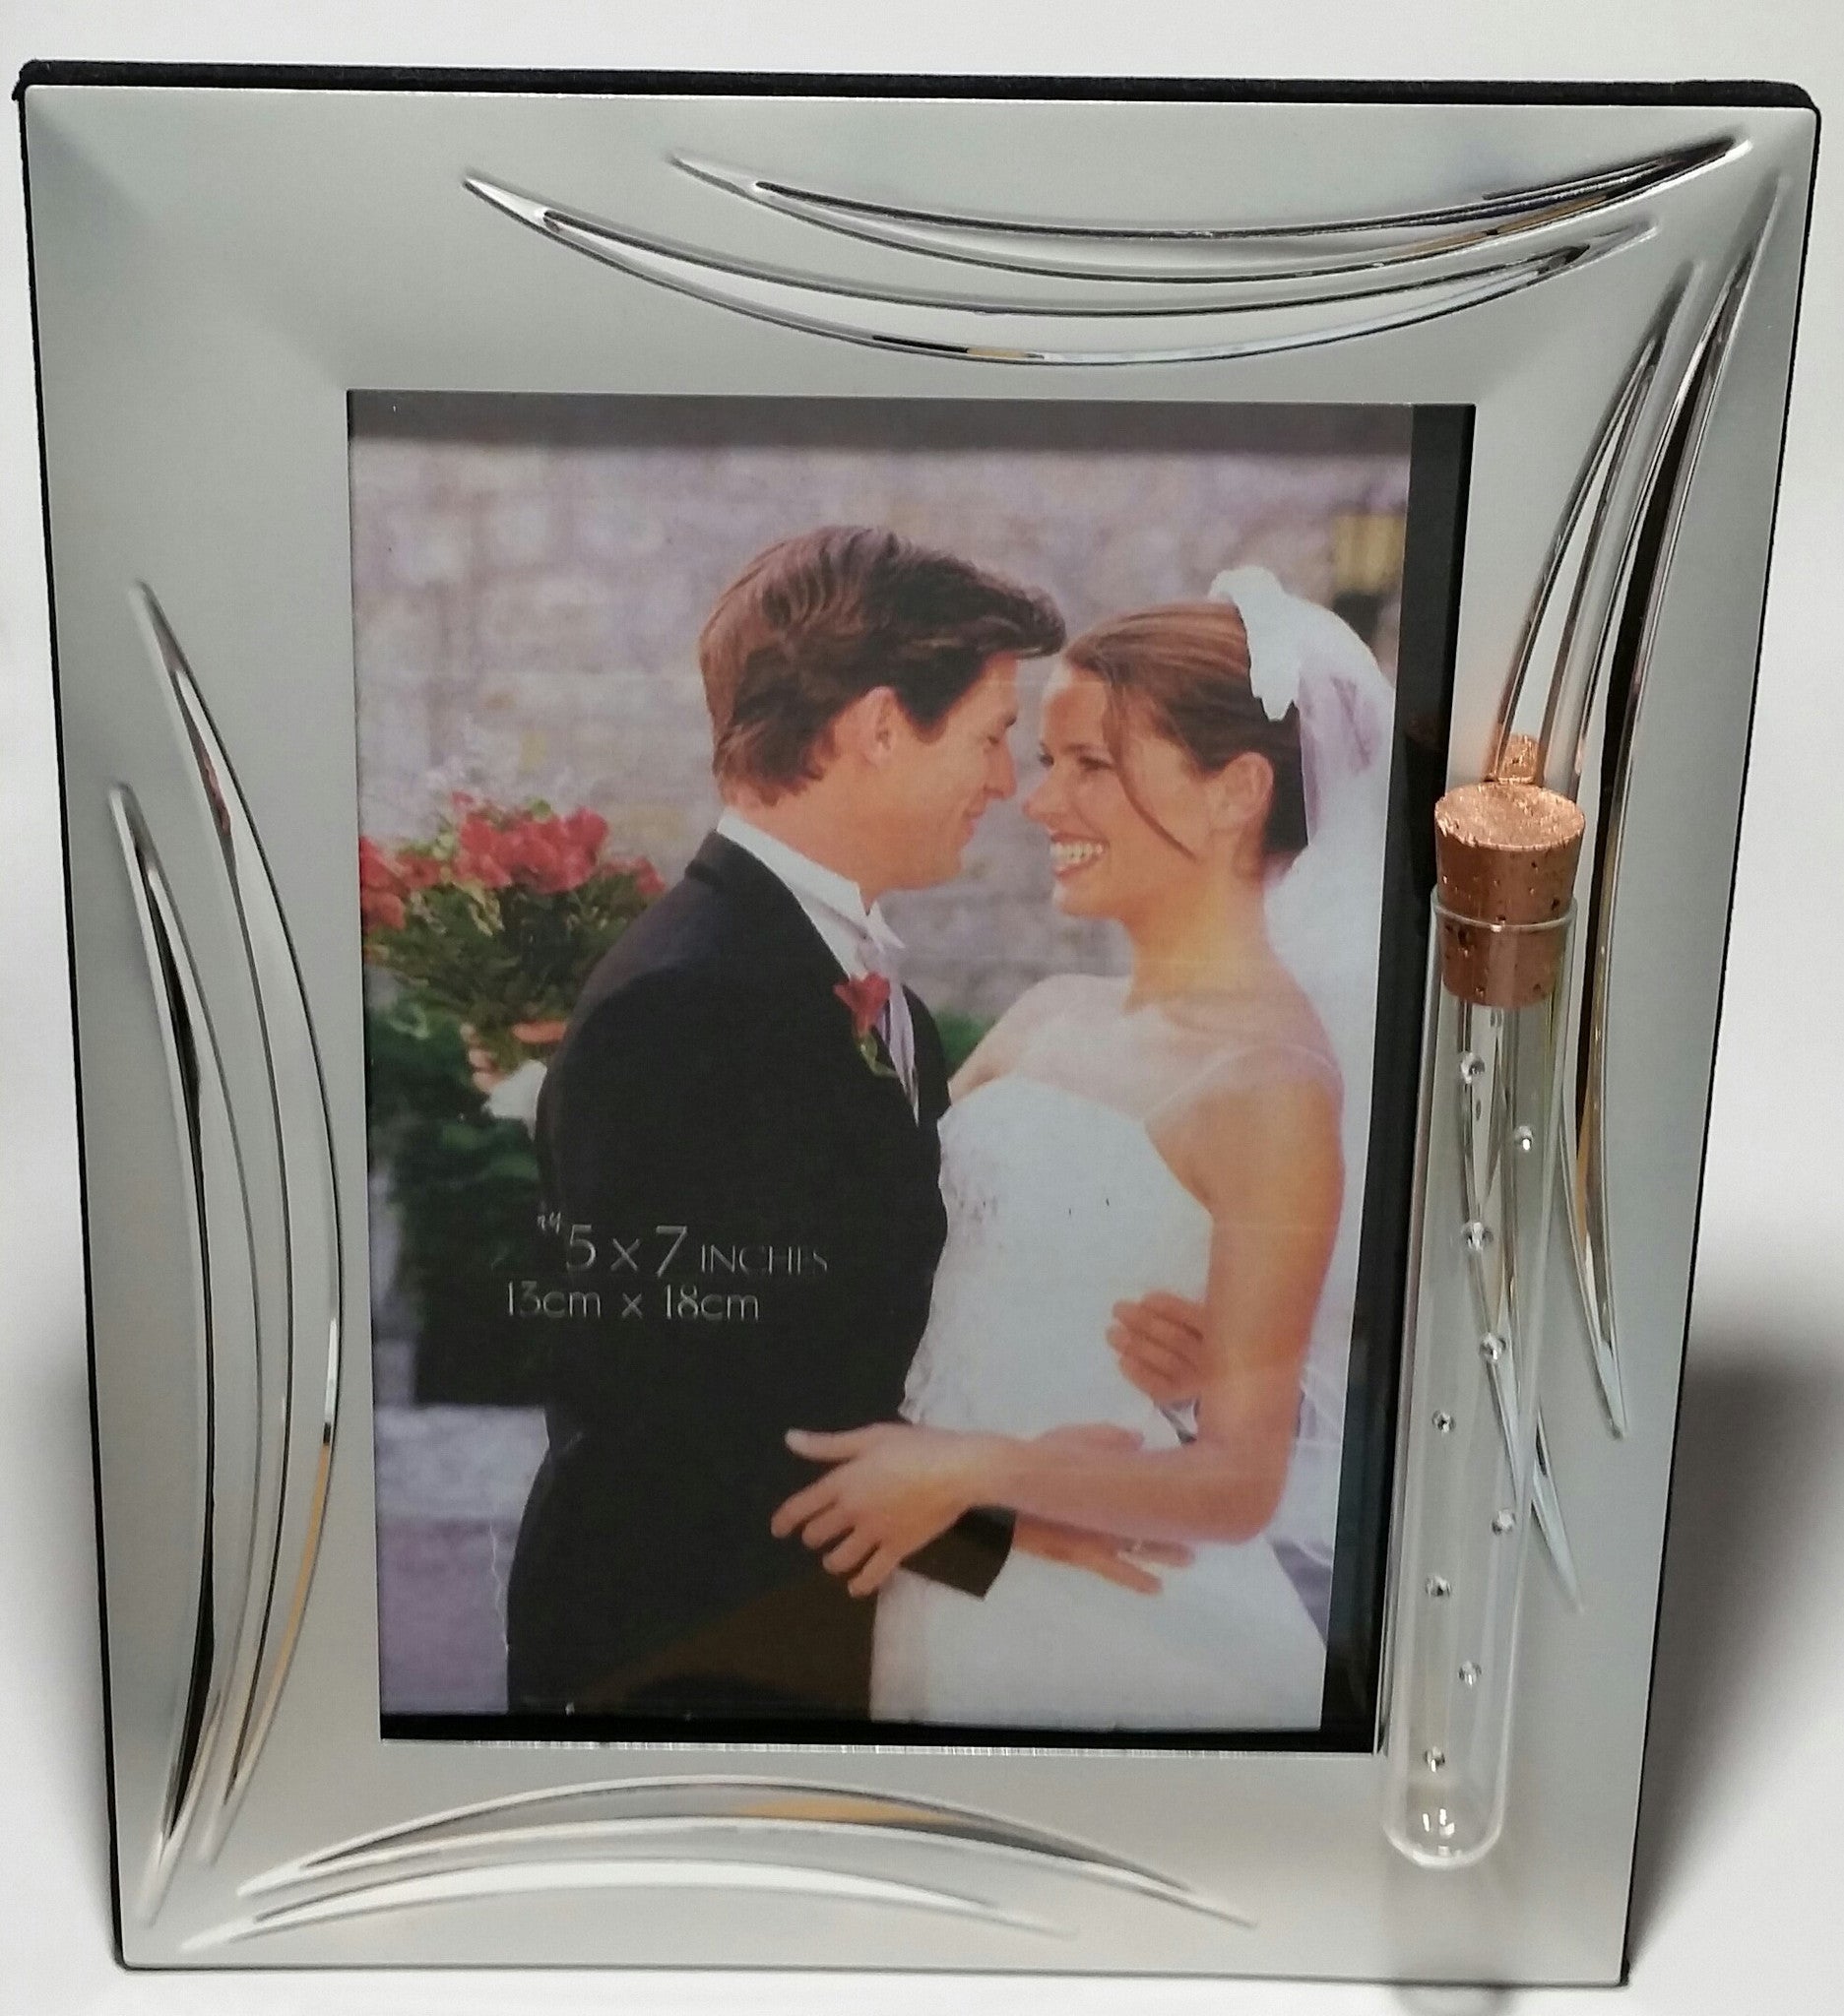 Jewish Wedding Picture Frame - Holds Shards Broken At Wedding Ceremony